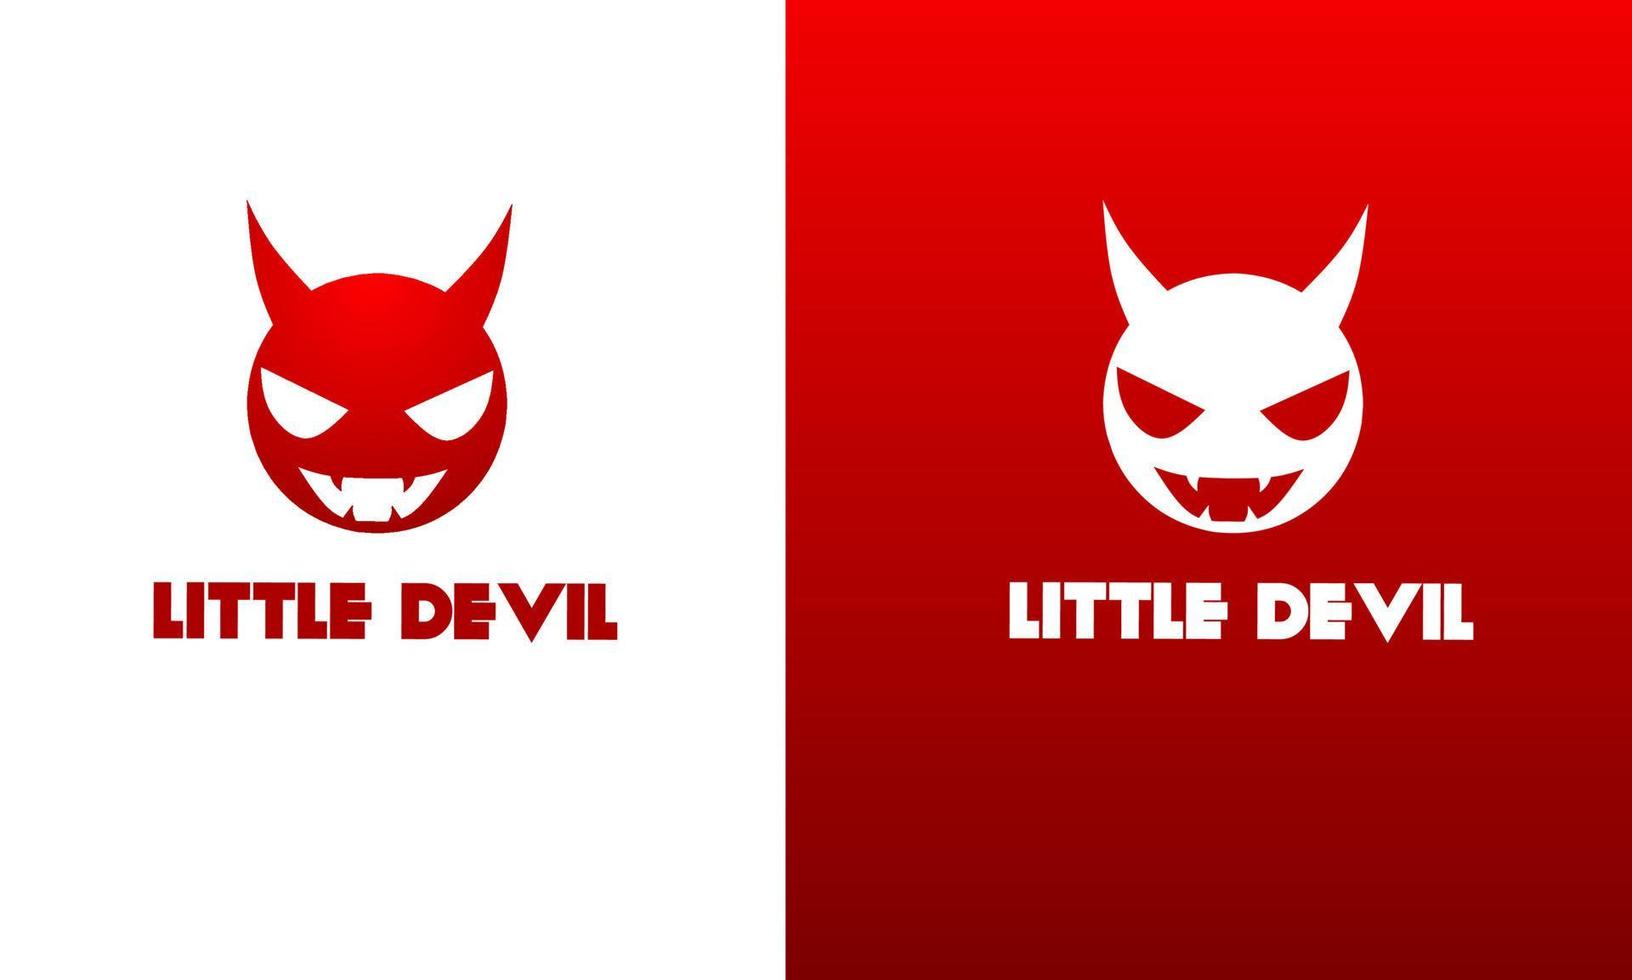 Template logo little devil red color vector